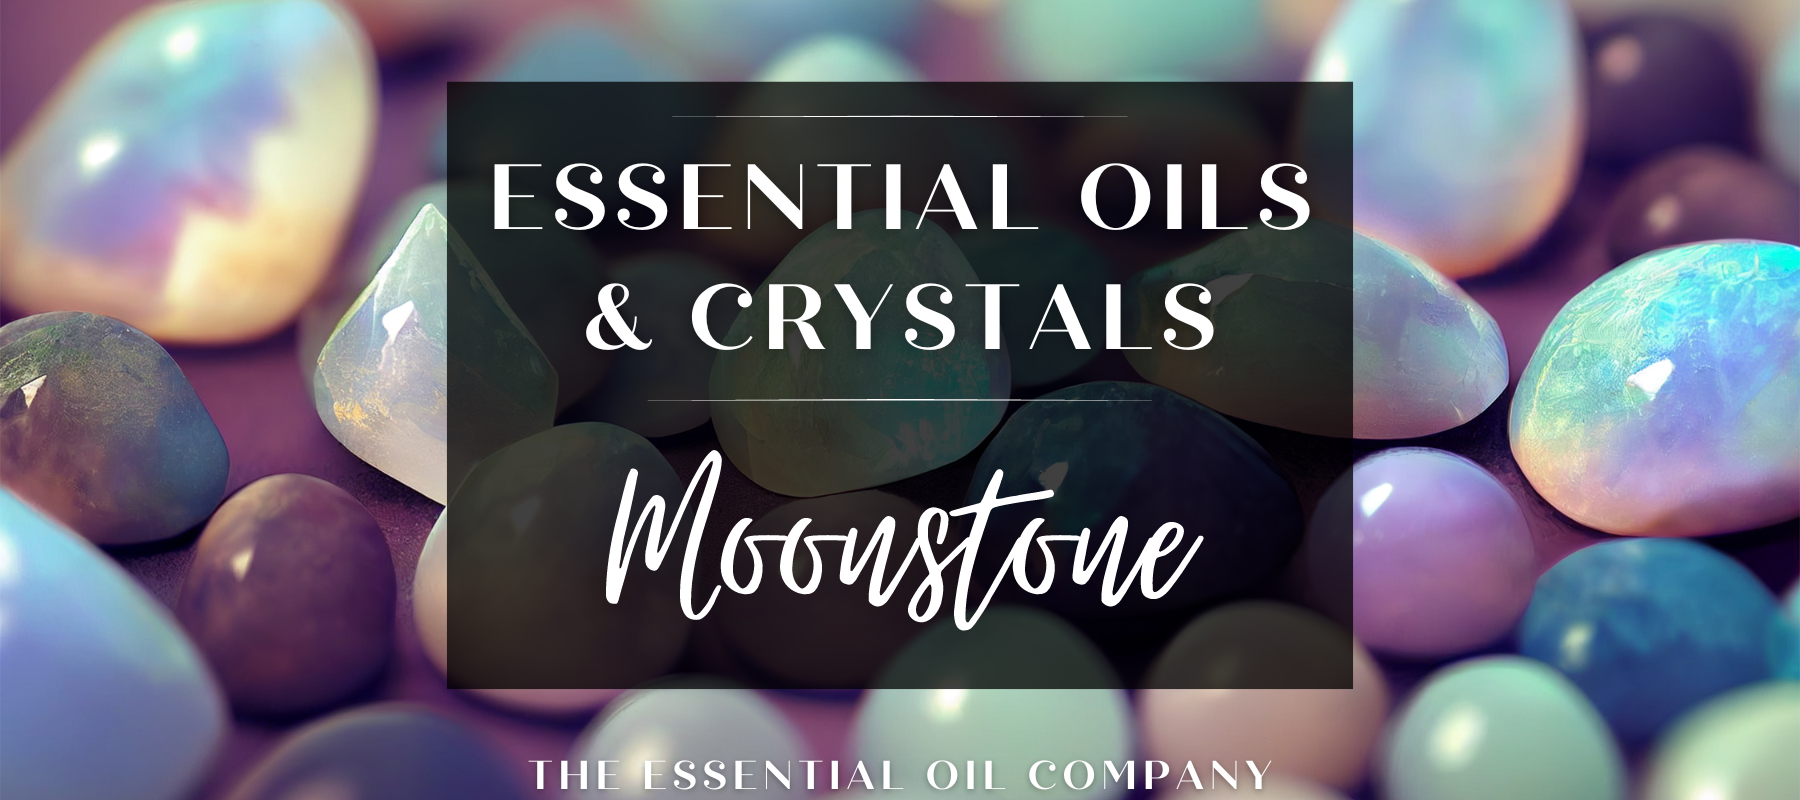 Essential Oils & Crystals: Moonstone